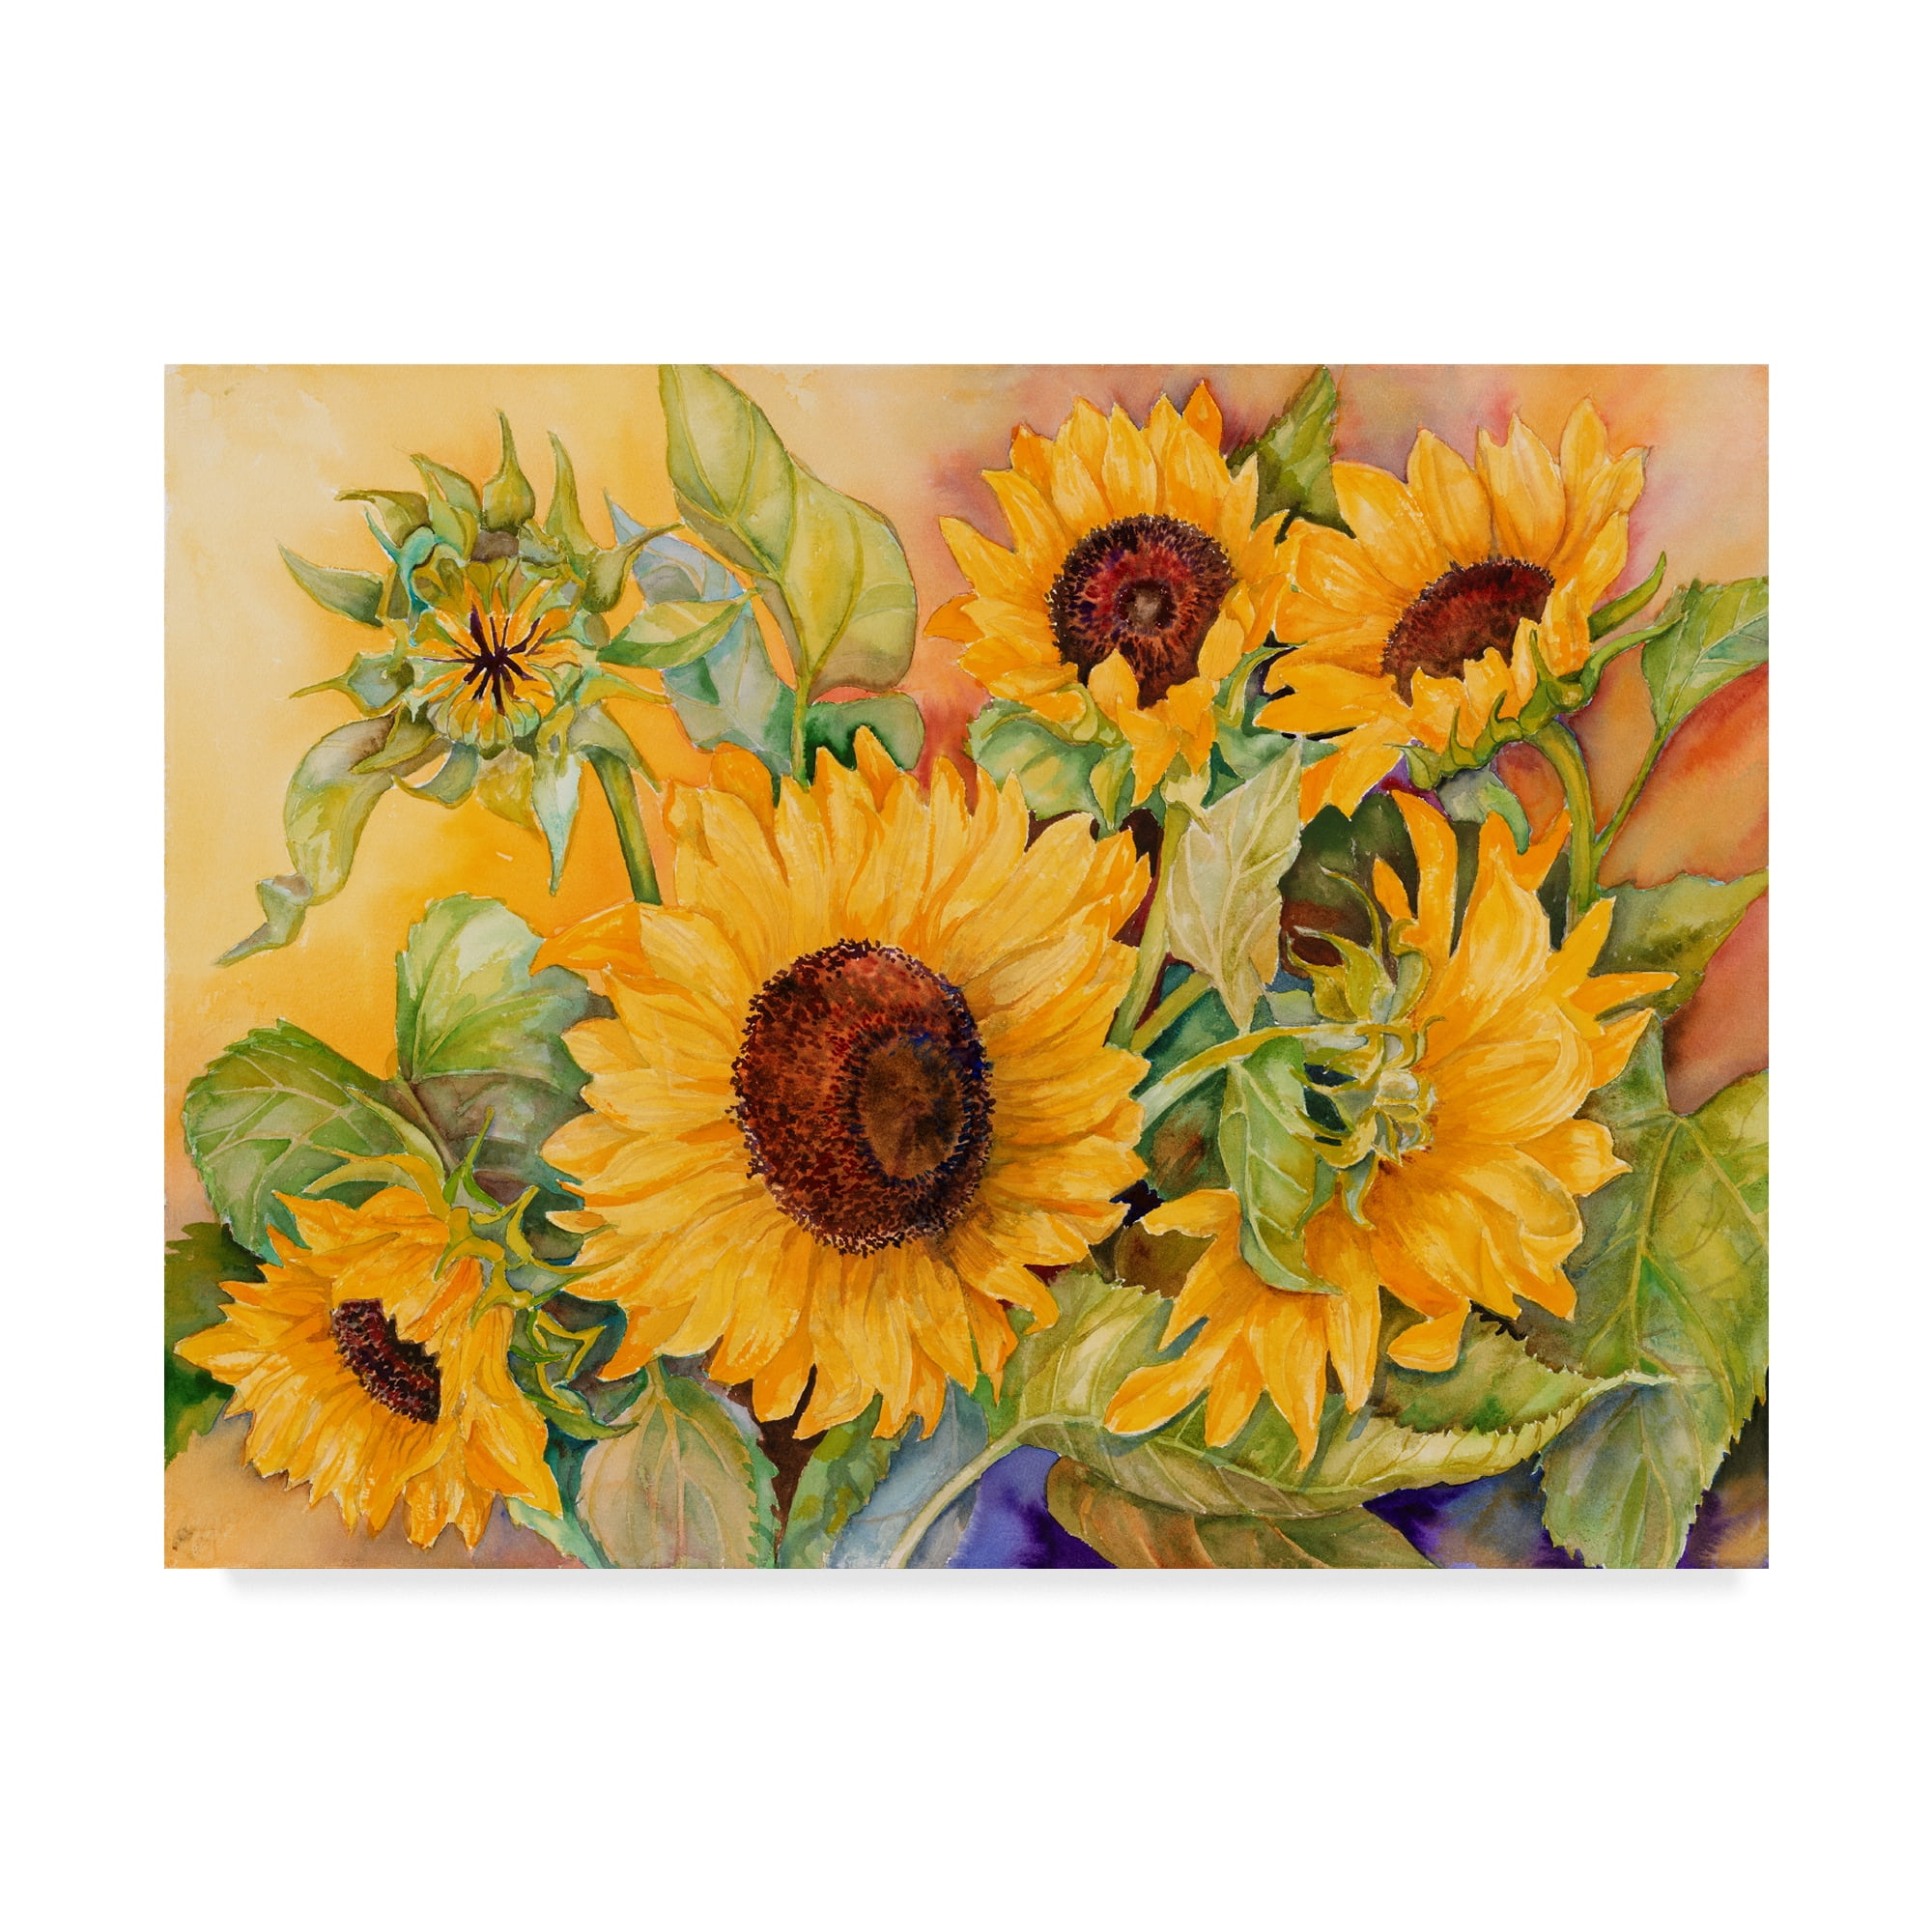 Golden Sunflowers in Vase 8.5x11" Photo Print Claude Monet Still Life Painting 